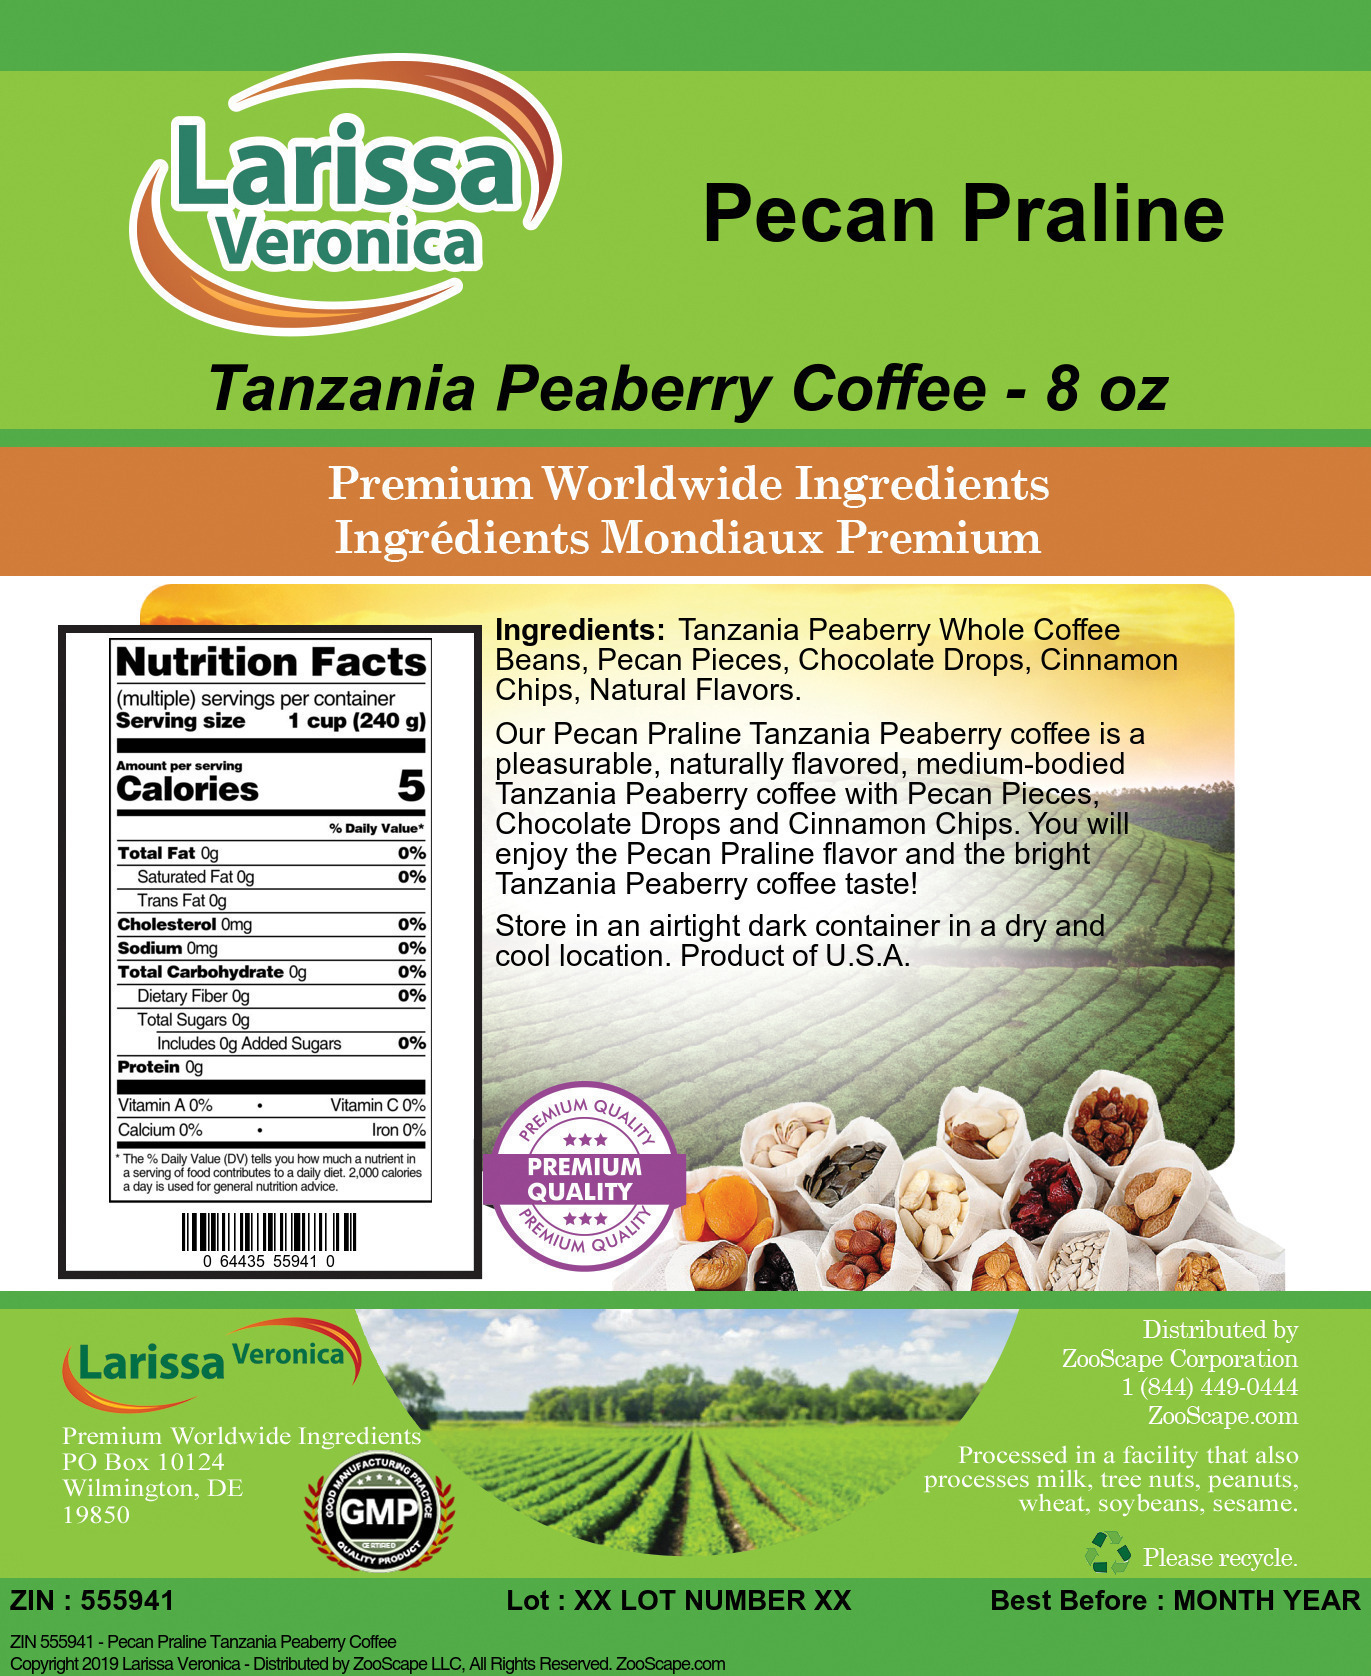 Pecan Praline Tanzania Peaberry Coffee - Label